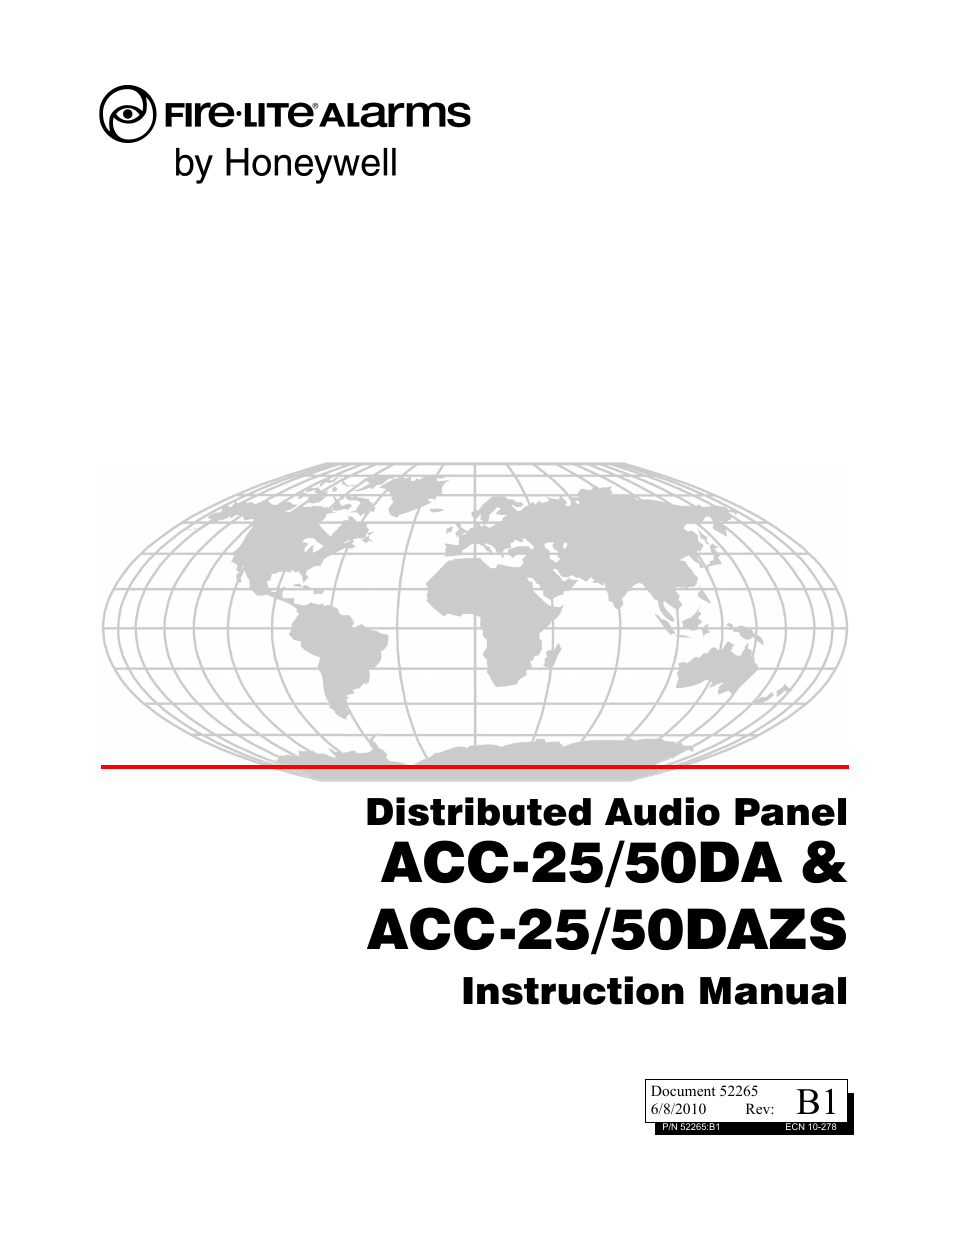 ACC-25/50DAZS Distributed Audio Panel